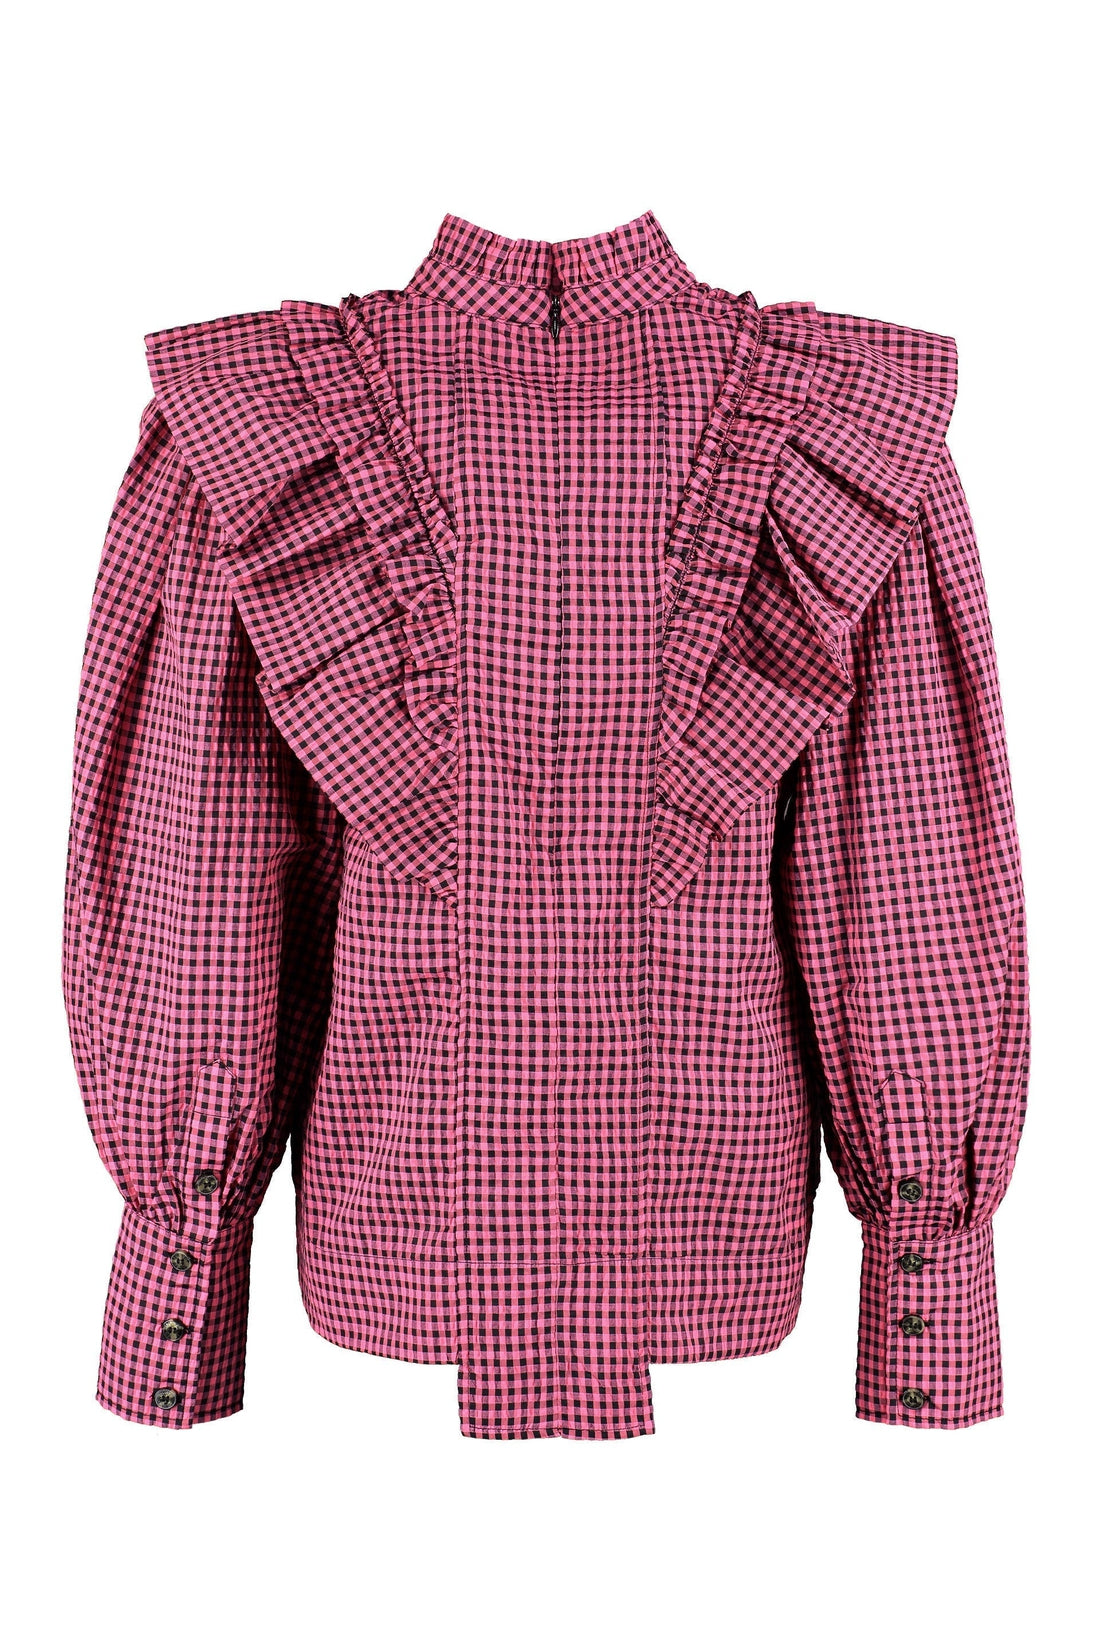 GANNI-OUTLET-SALE-Gingham motif shirt-ARCHIVIST